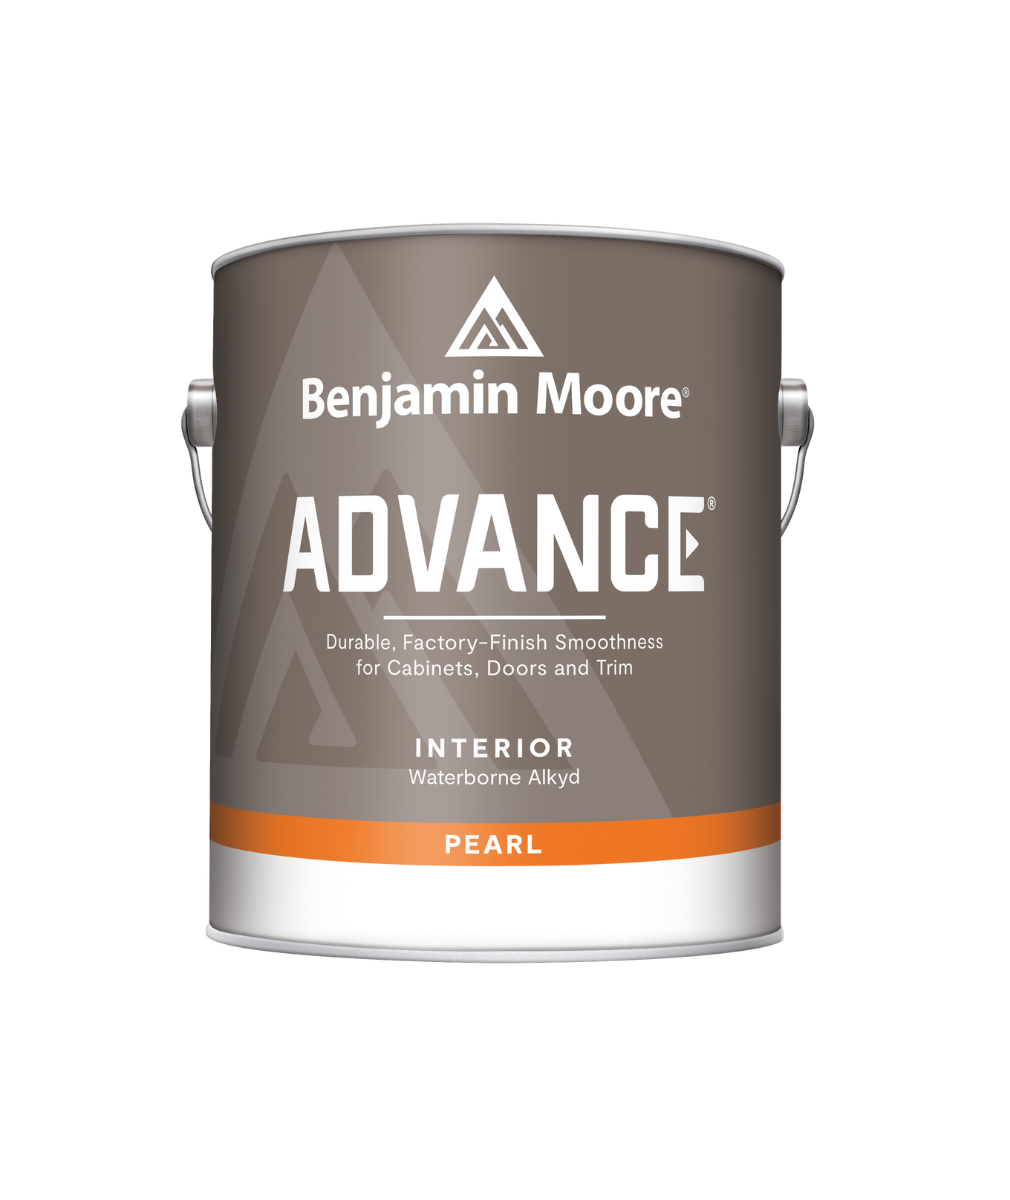 Benjamin Moore Advance Satin Paint available at Wallauer Paint & Design.